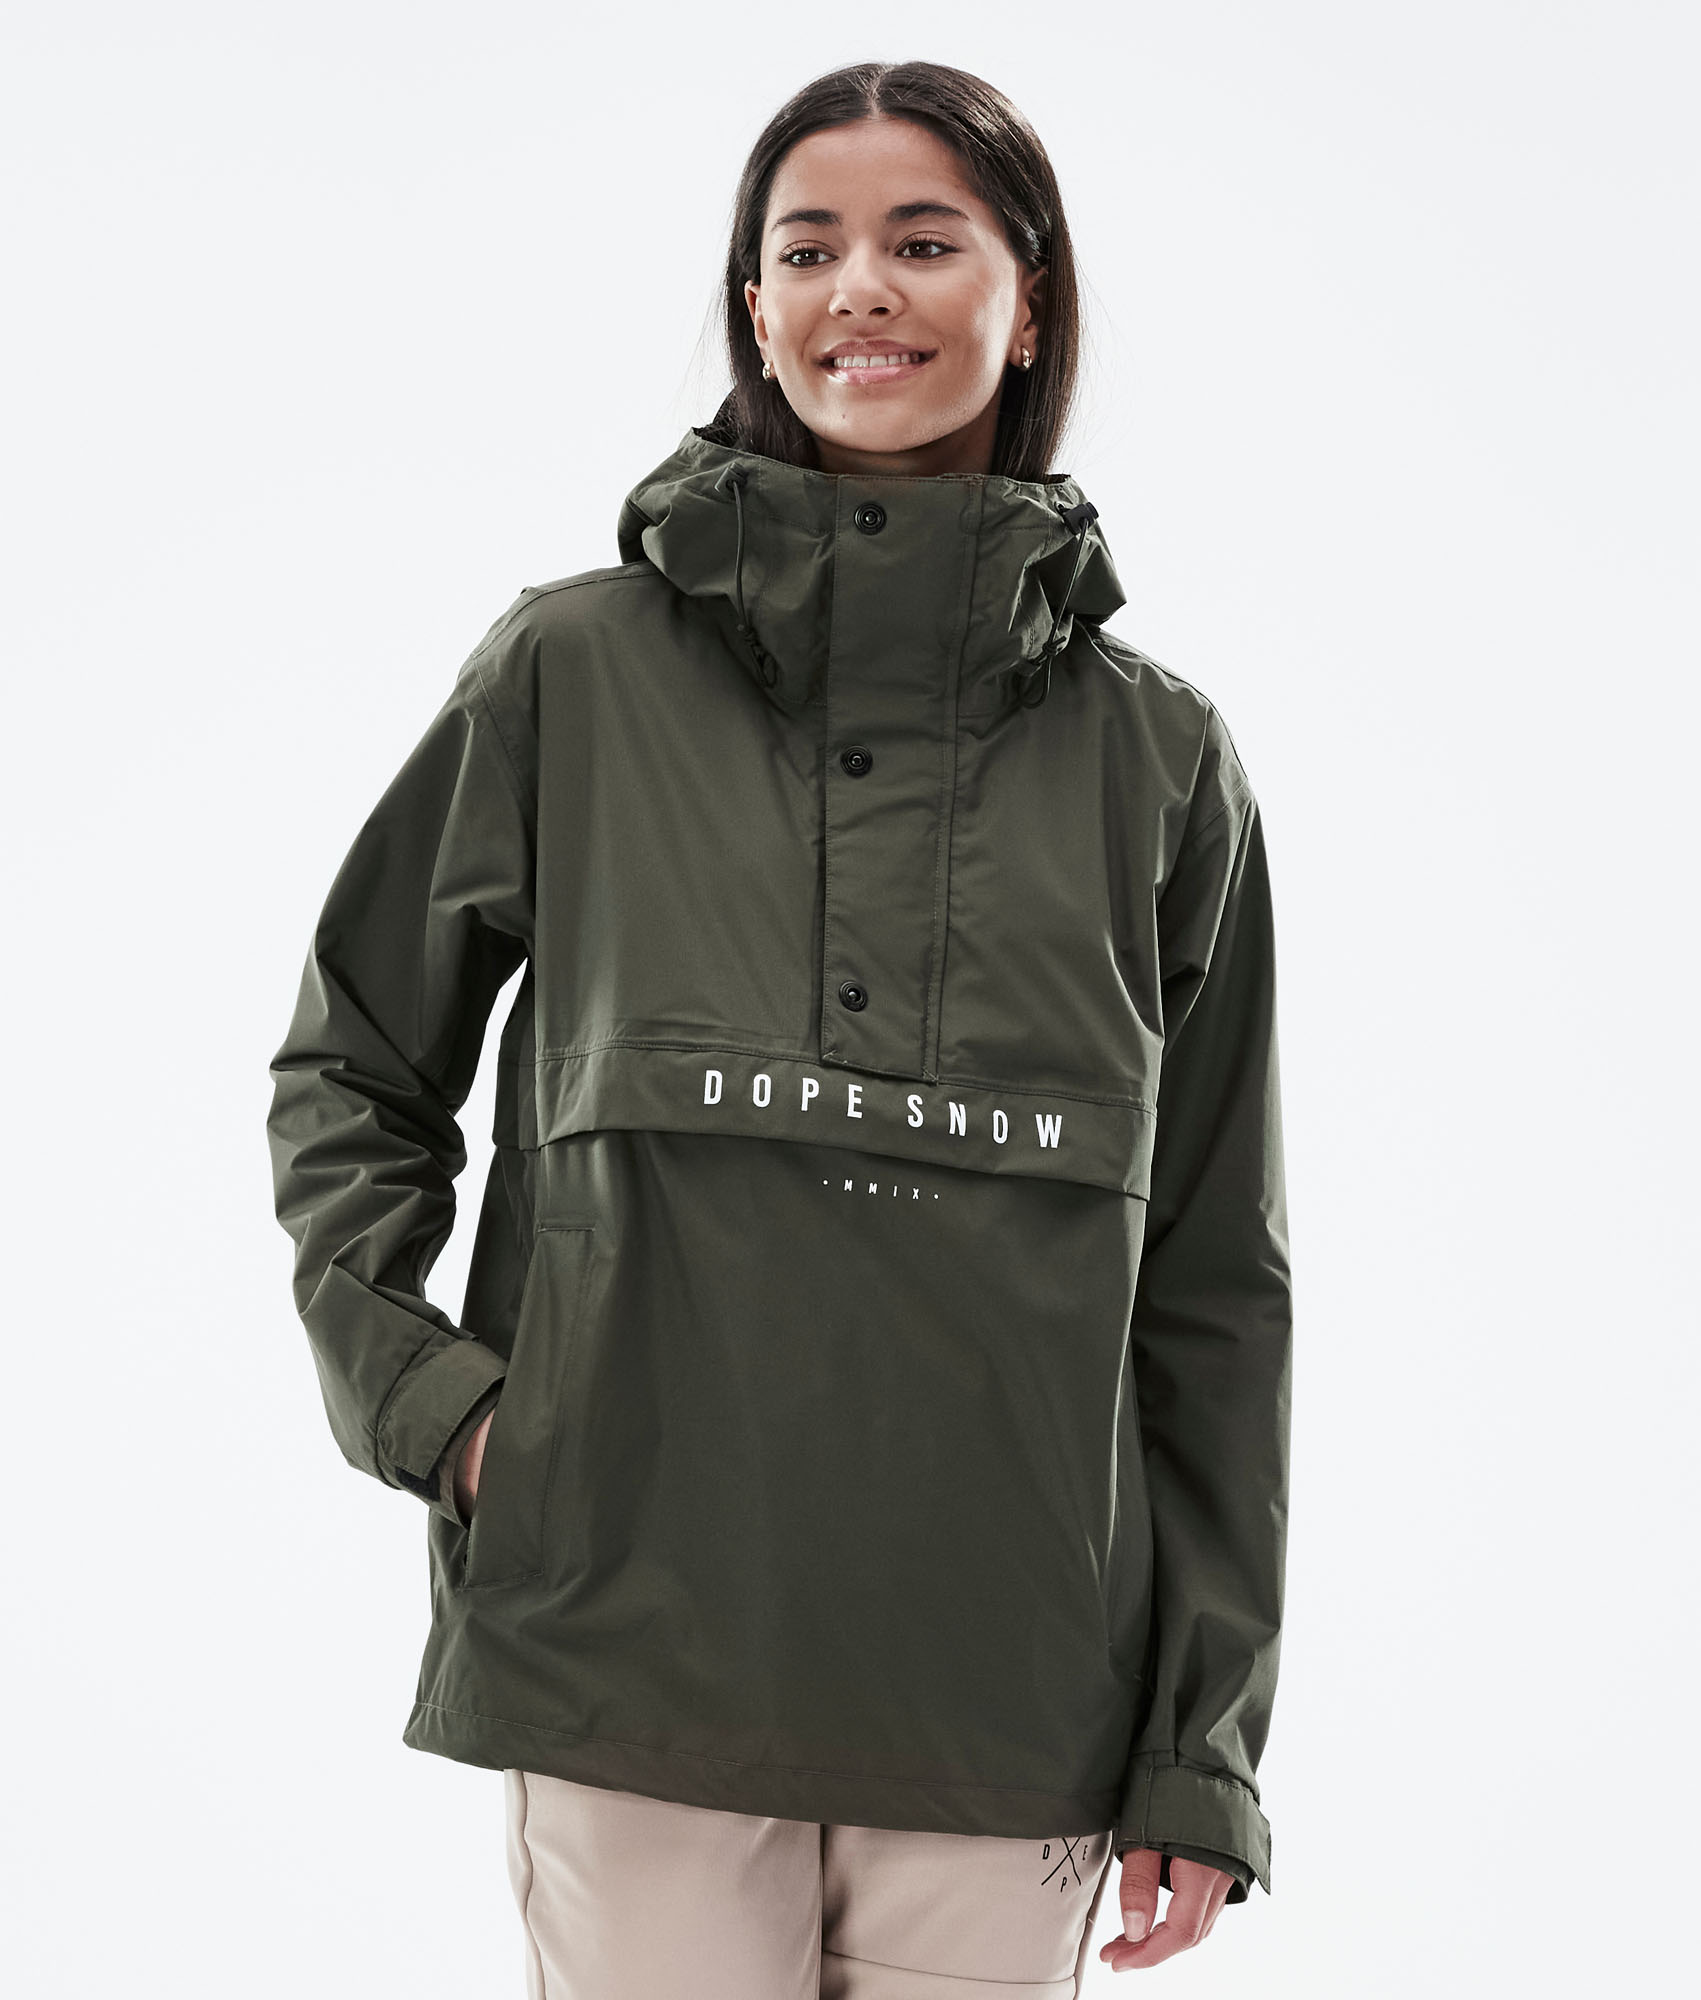 fasloyu Womens Raincoats Waterproof Packable Patchwork Windbreaker Lightweight Active Outdoor Hooded Rain Jacket 